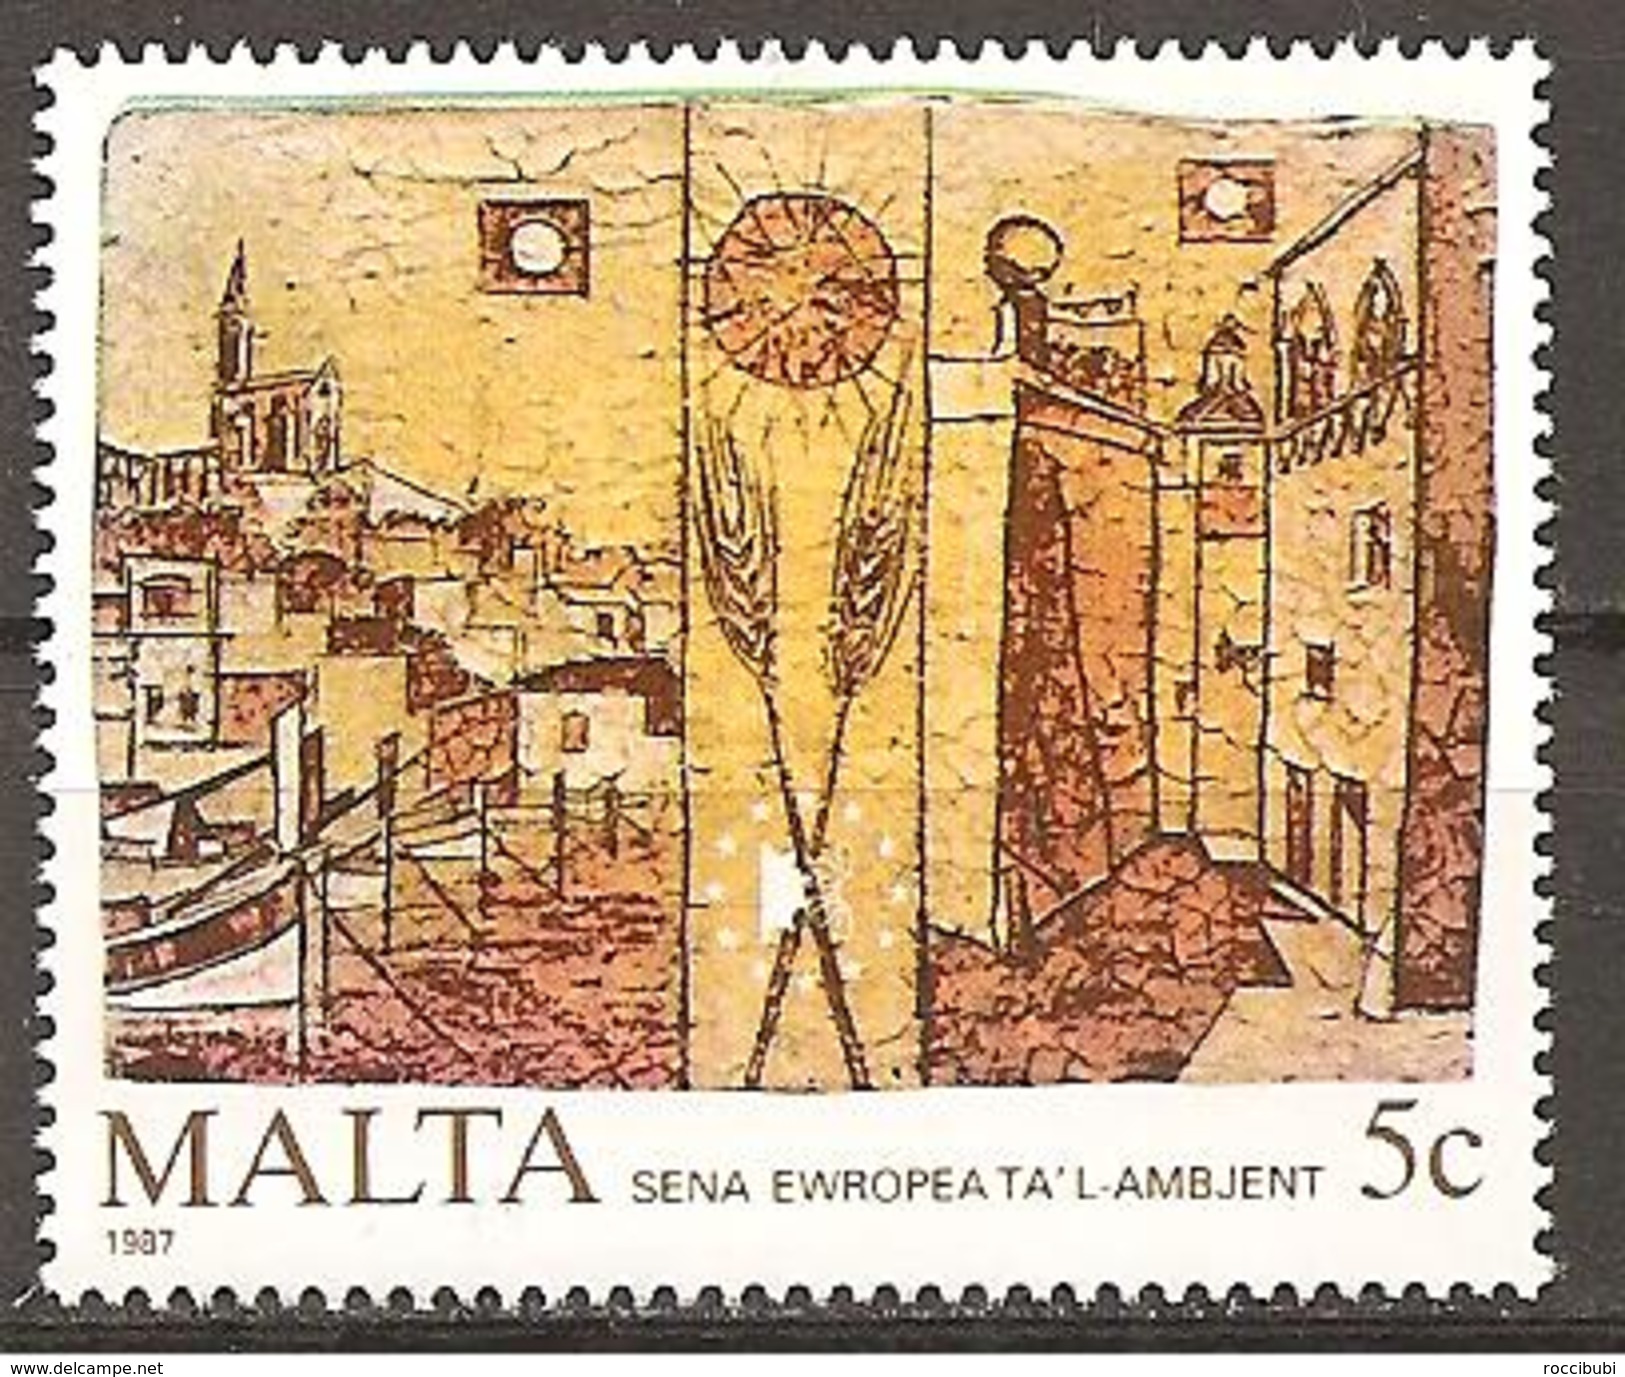 Malta 1987 // Michel 772 ** (M) - Engravings